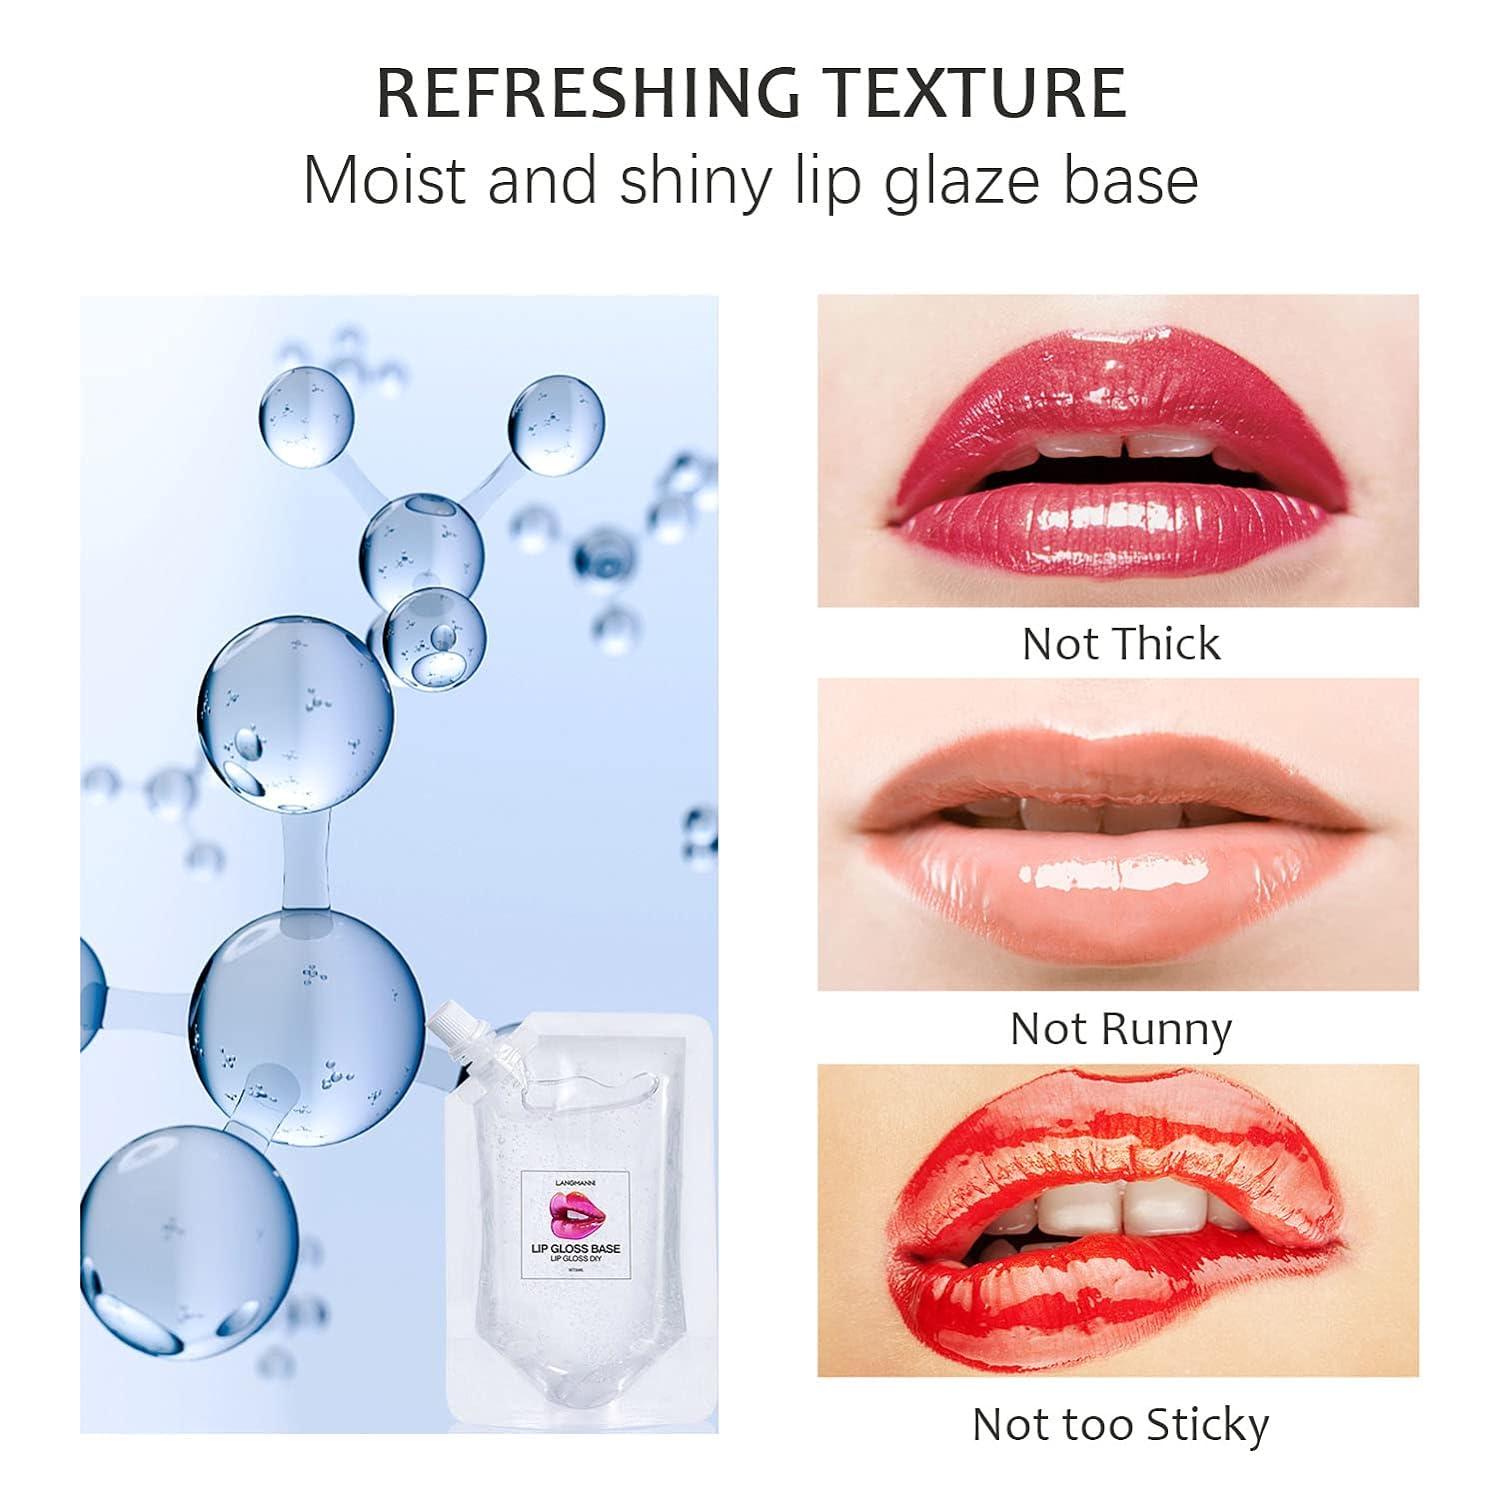  Eakroo 2Pcs Moisturize Lip Gloss Base Oil Material Makeup  Primers, Non-Stick Lipstick Primer for DIY Handmade Lip Balms Lip Gloss  -100g (2Pack 100ml) : Beauty & Personal Care